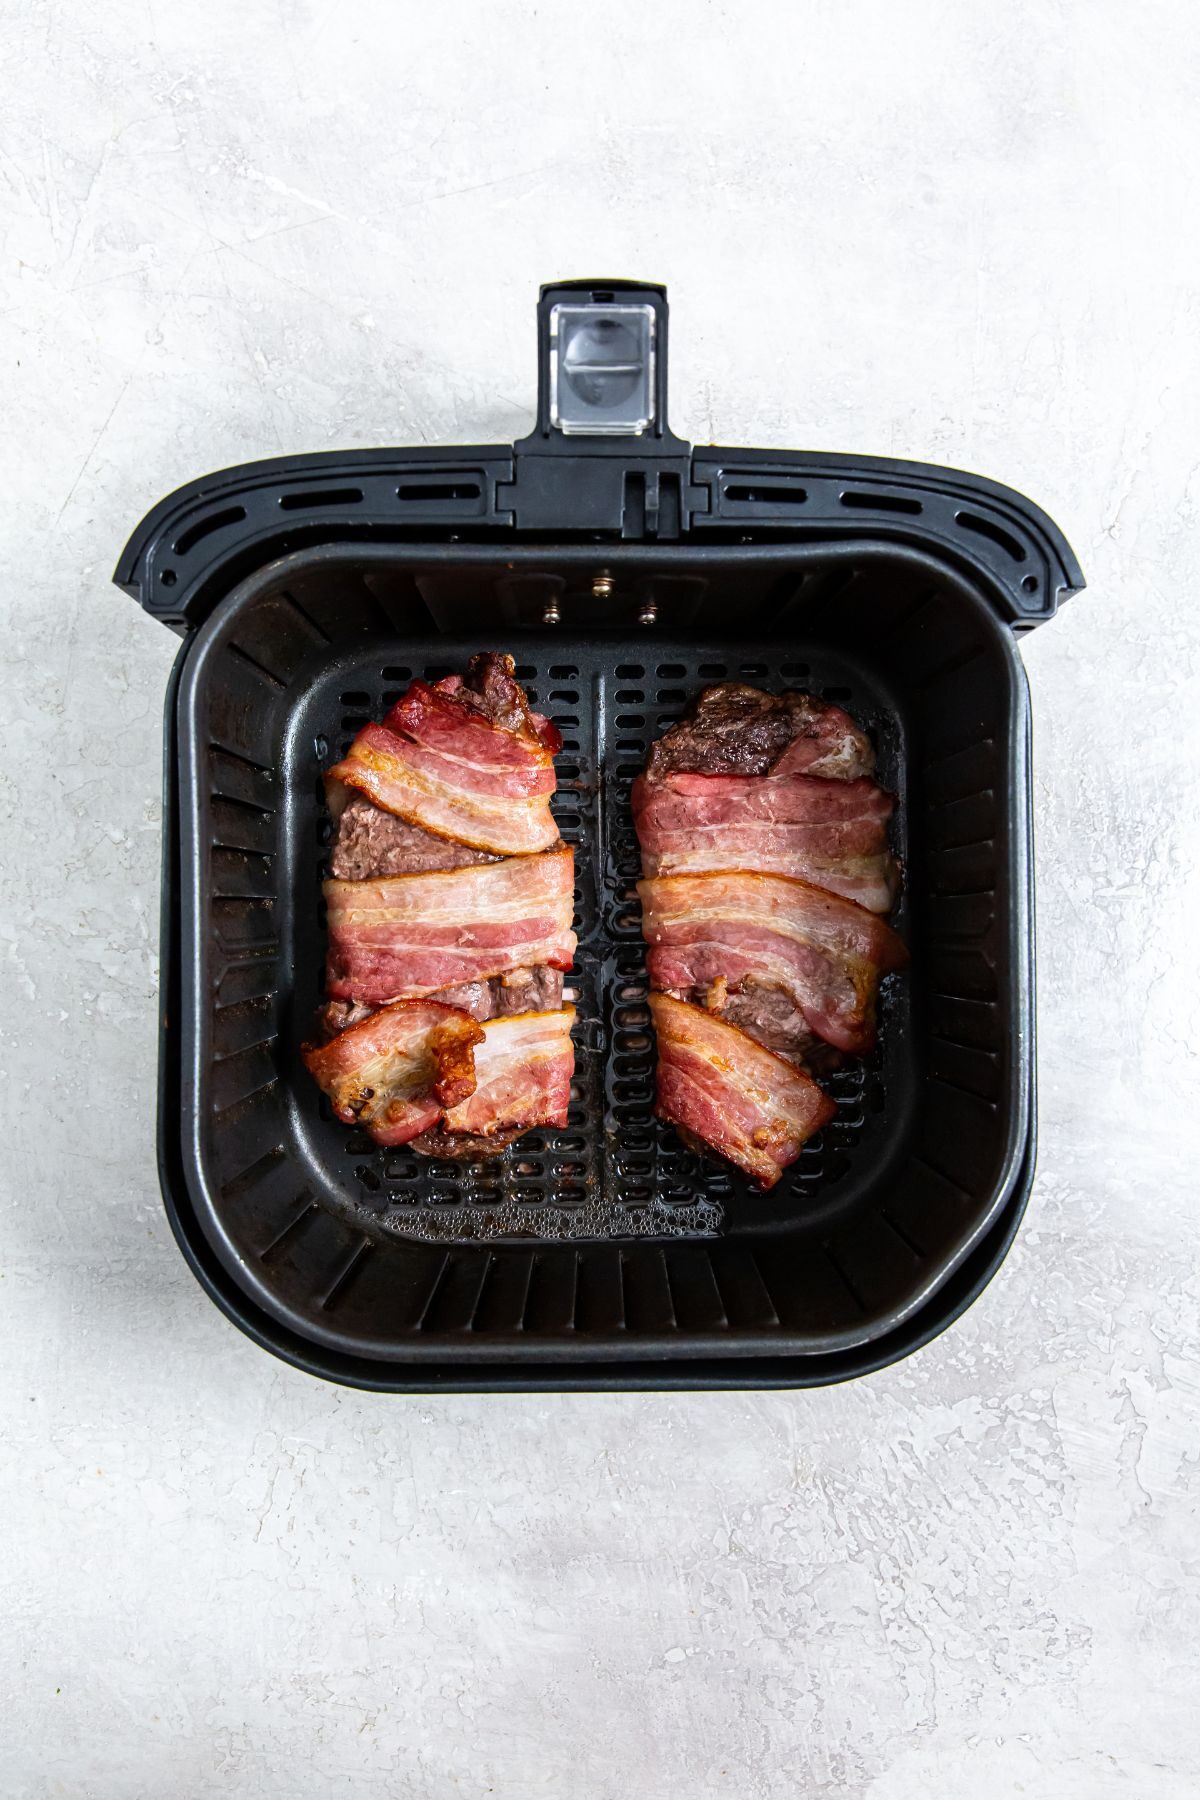 Bacon Wrapped Ribeye Steak in the air fryer basket